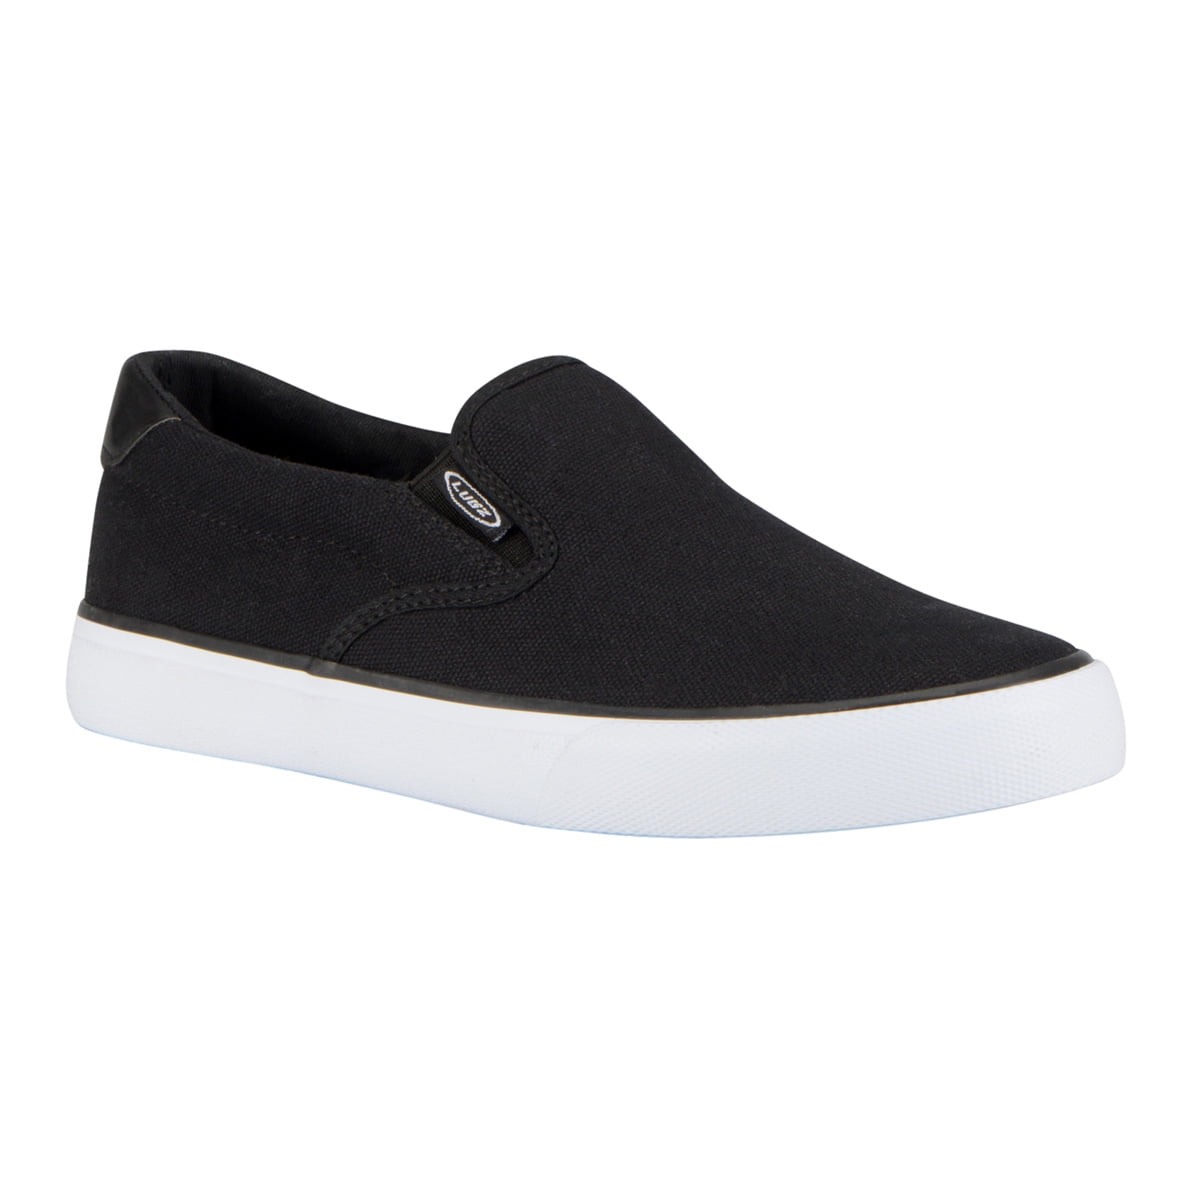 5 Plimsolls Canvas No Fastenings Indoor Footwear Black Slip on Size 4 